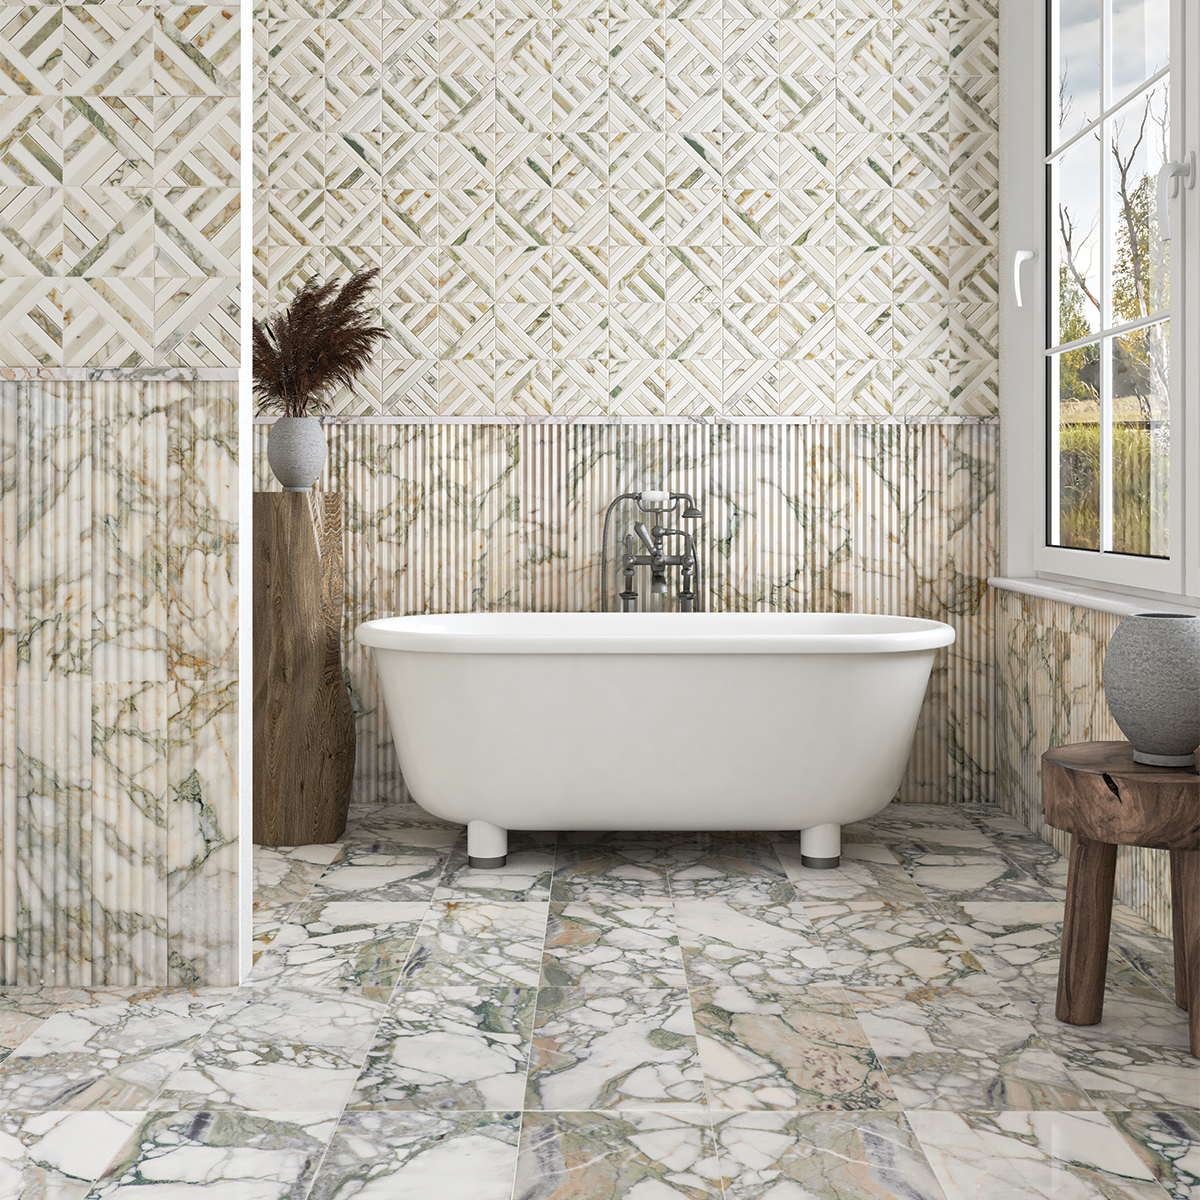 Green marble mosaic tiles